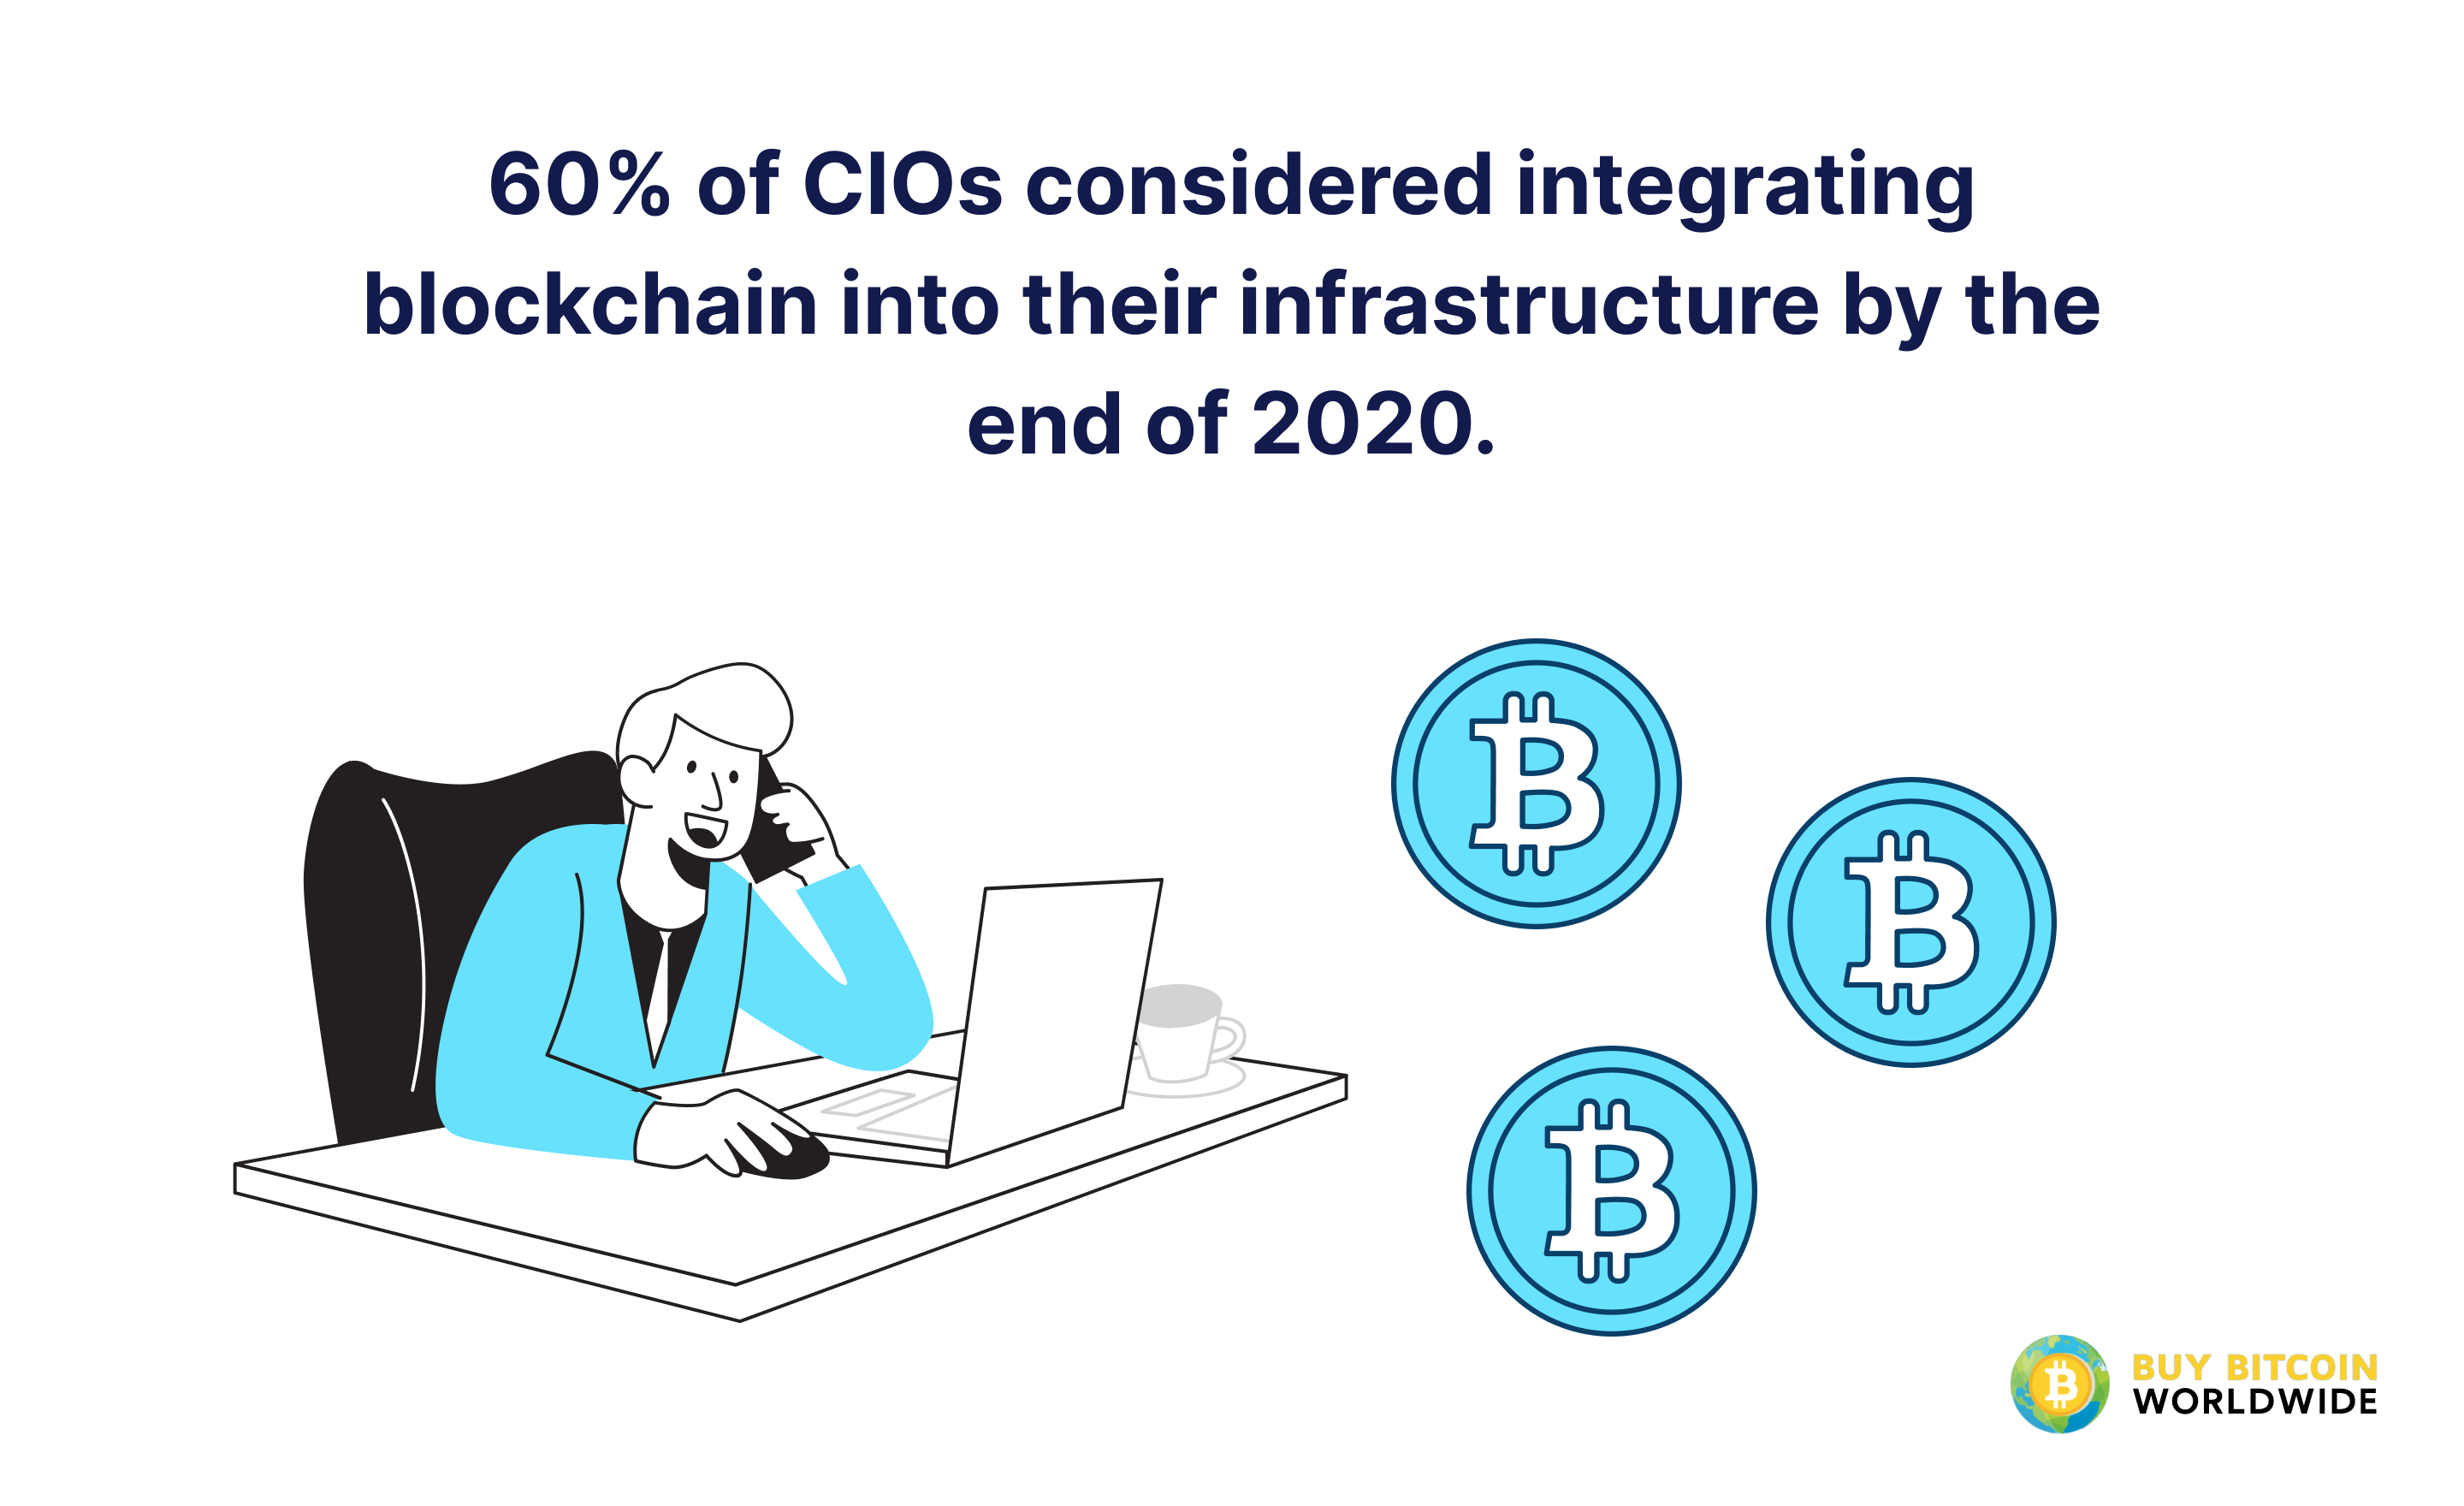 60% of CIOs might integrate blockchain